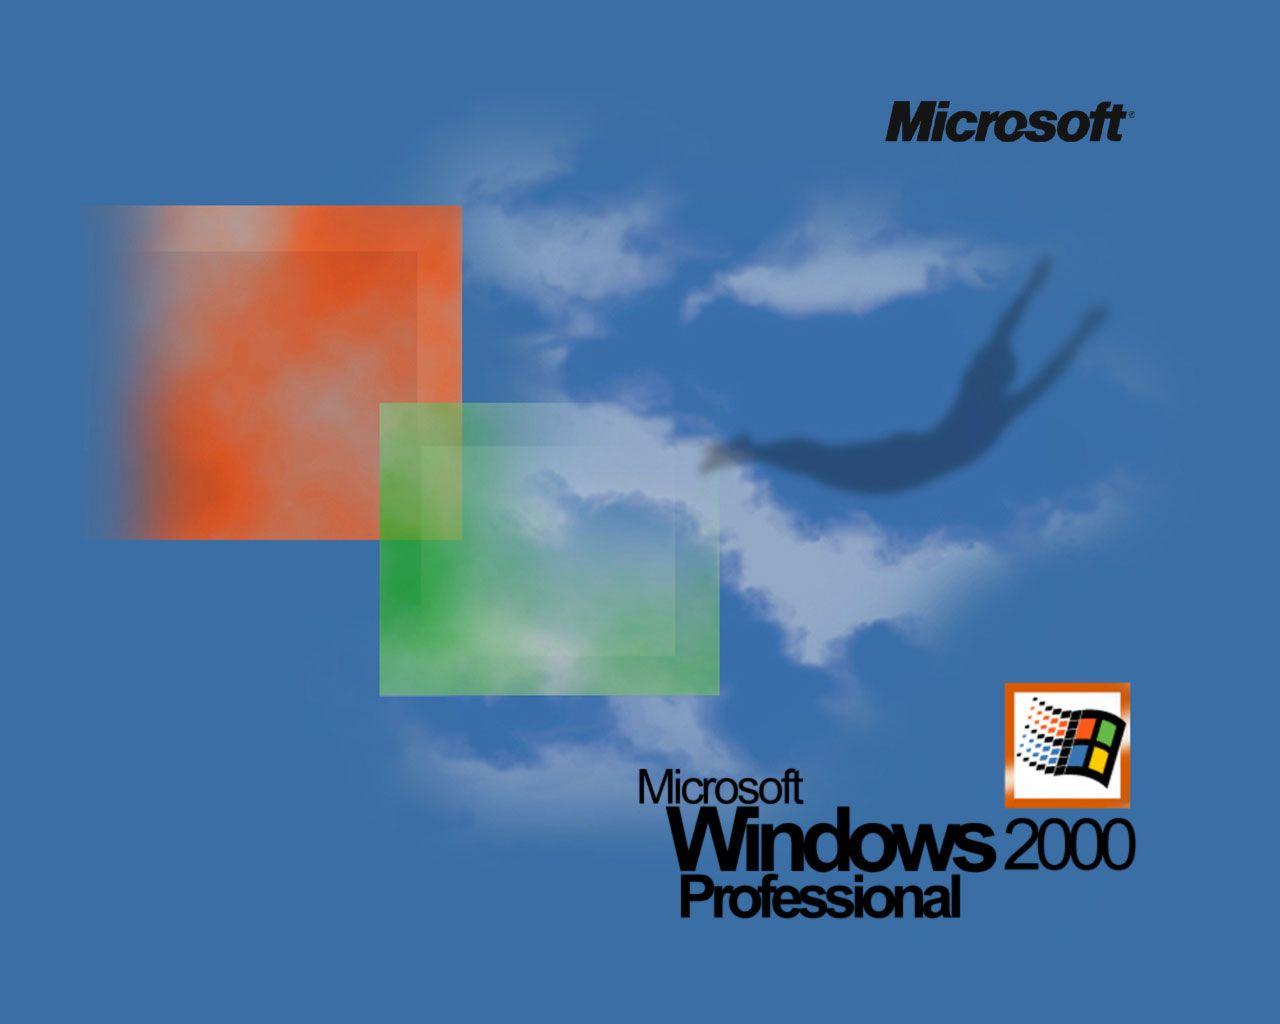 Windows 2000 Professional Logo - Windows Wallpaper. Just For You Forever: Windows 2000 Professional